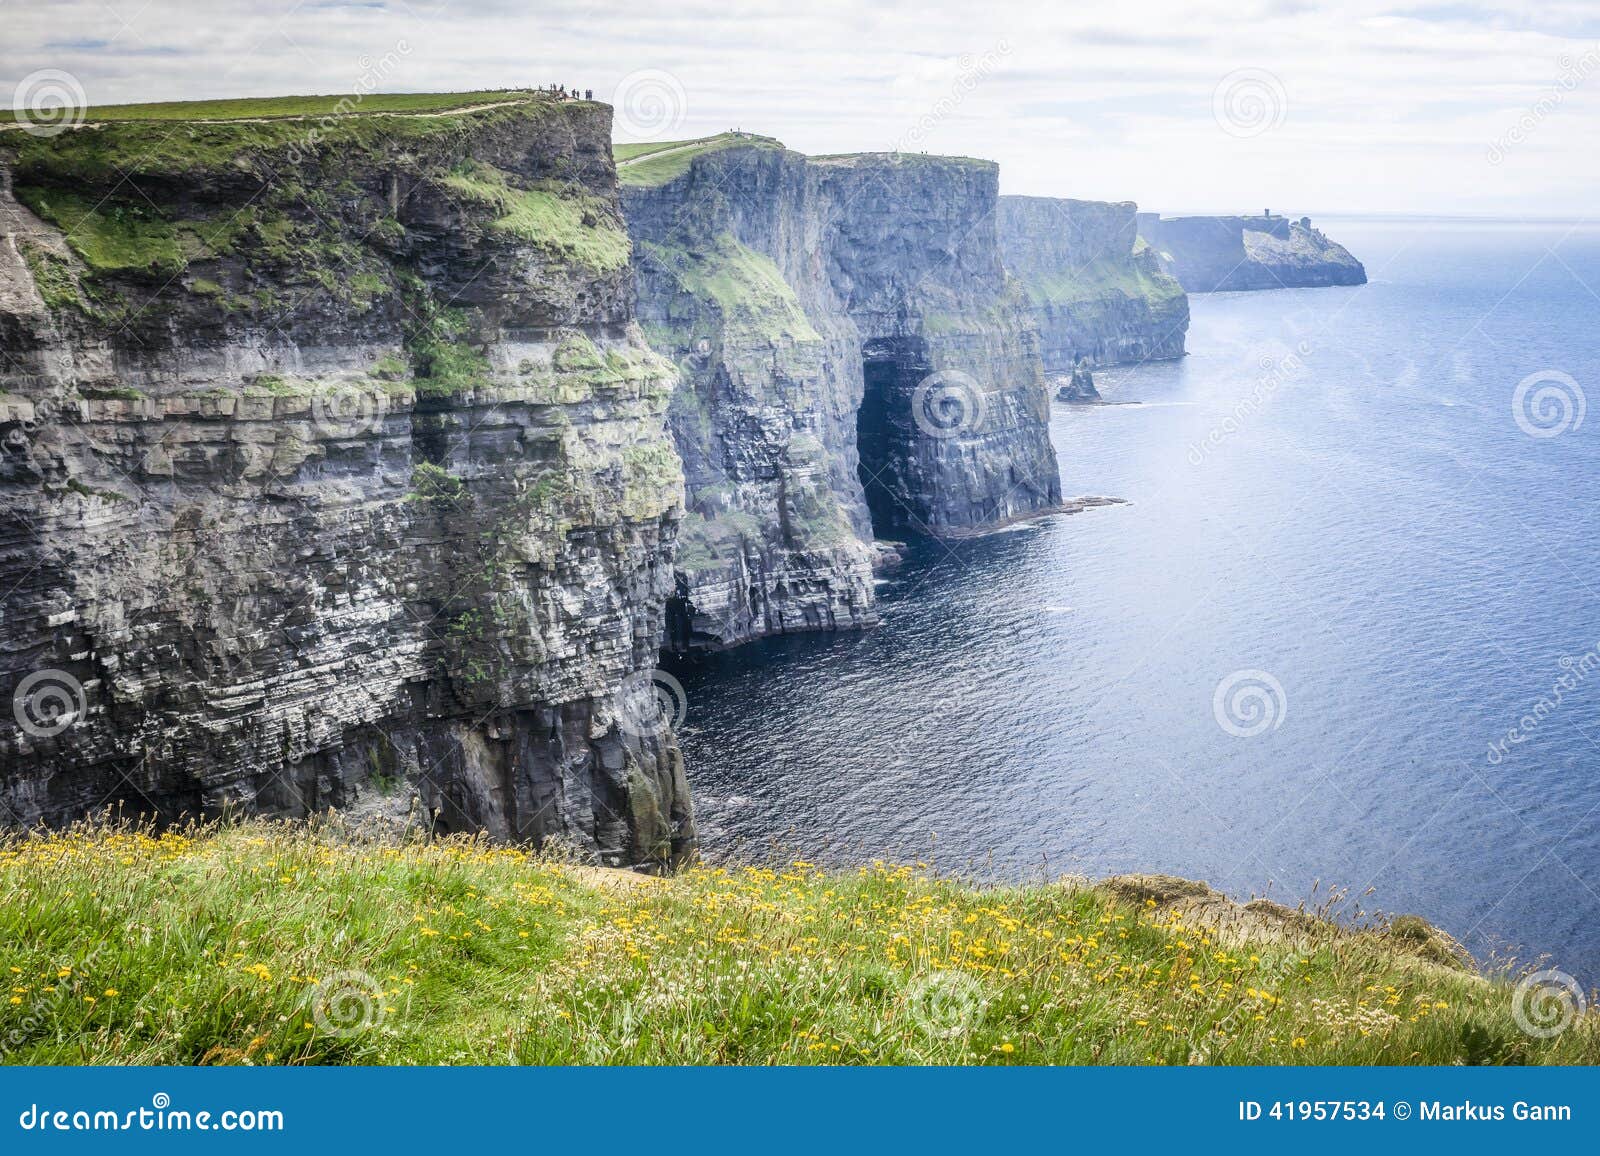 cliffs of moher ireland